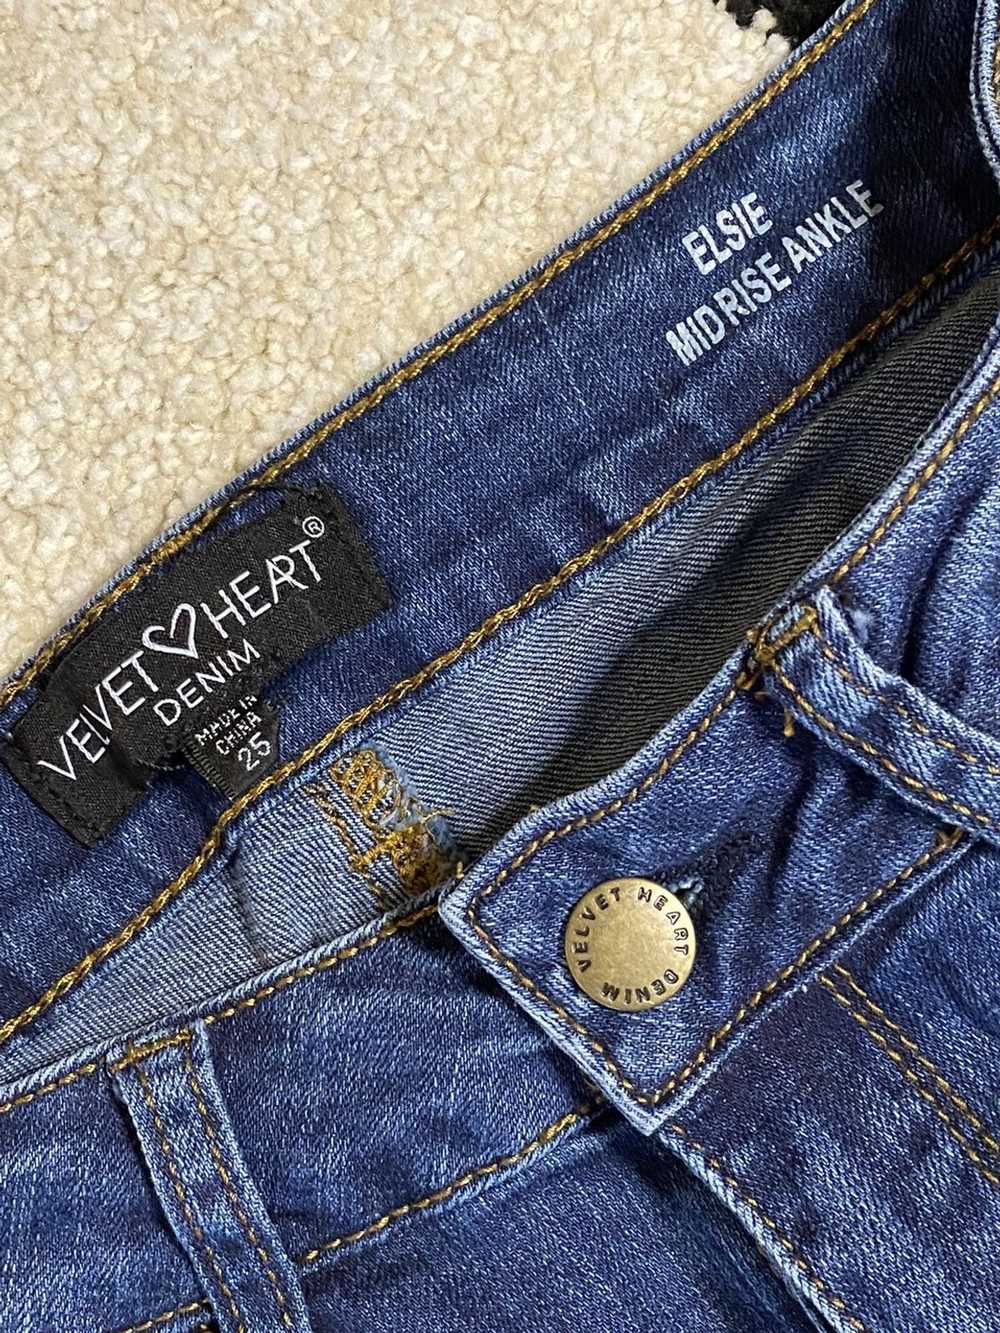 Streetwear Floral jeans size 25 - image 5